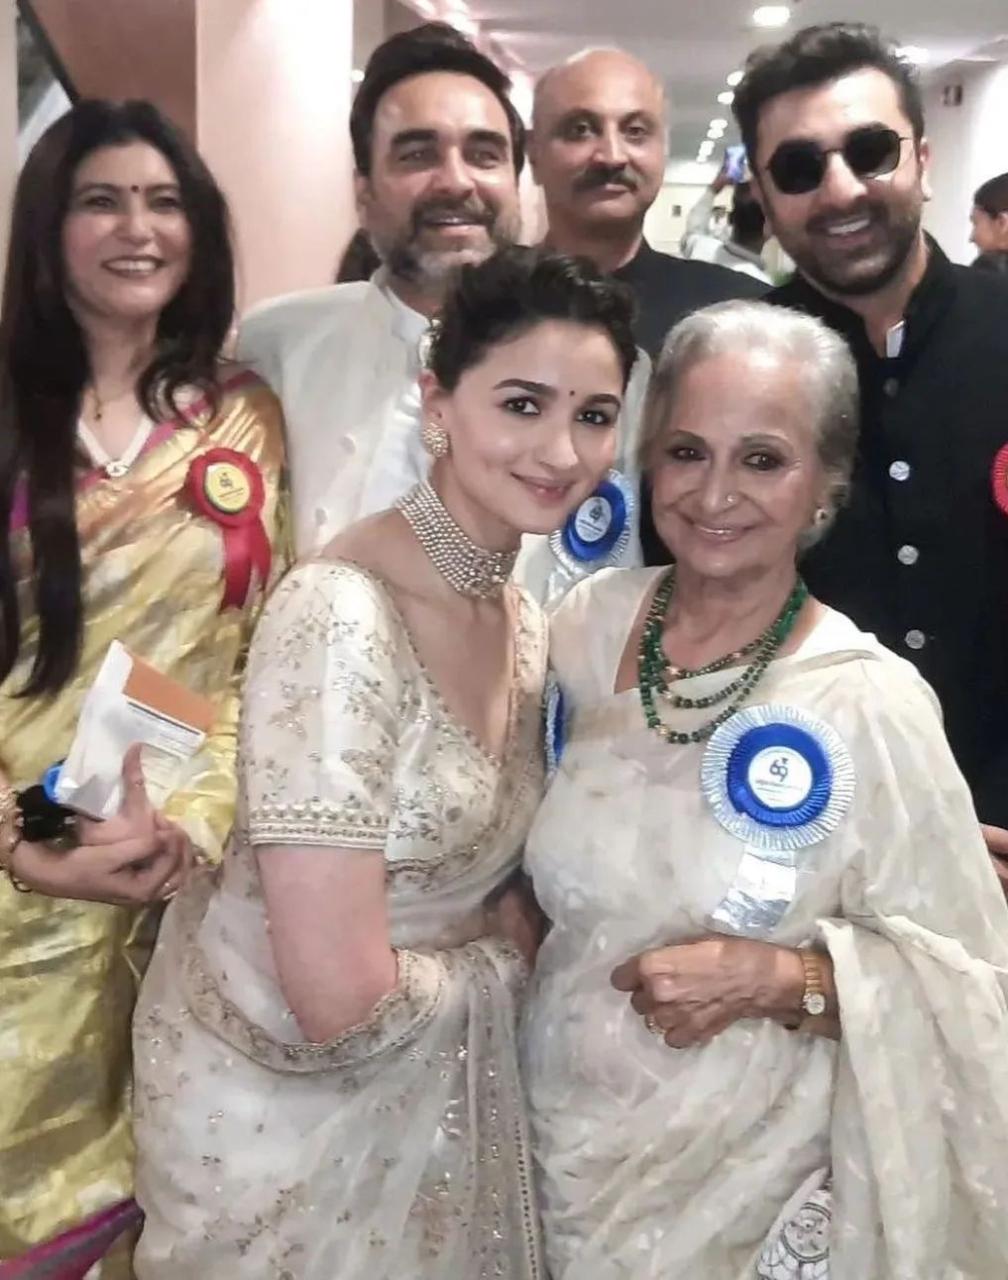 Alia Bhatt, Ranbir Kapoor, Pankaj Tripathi and his wife clicked a picture with Waheeda Rehman